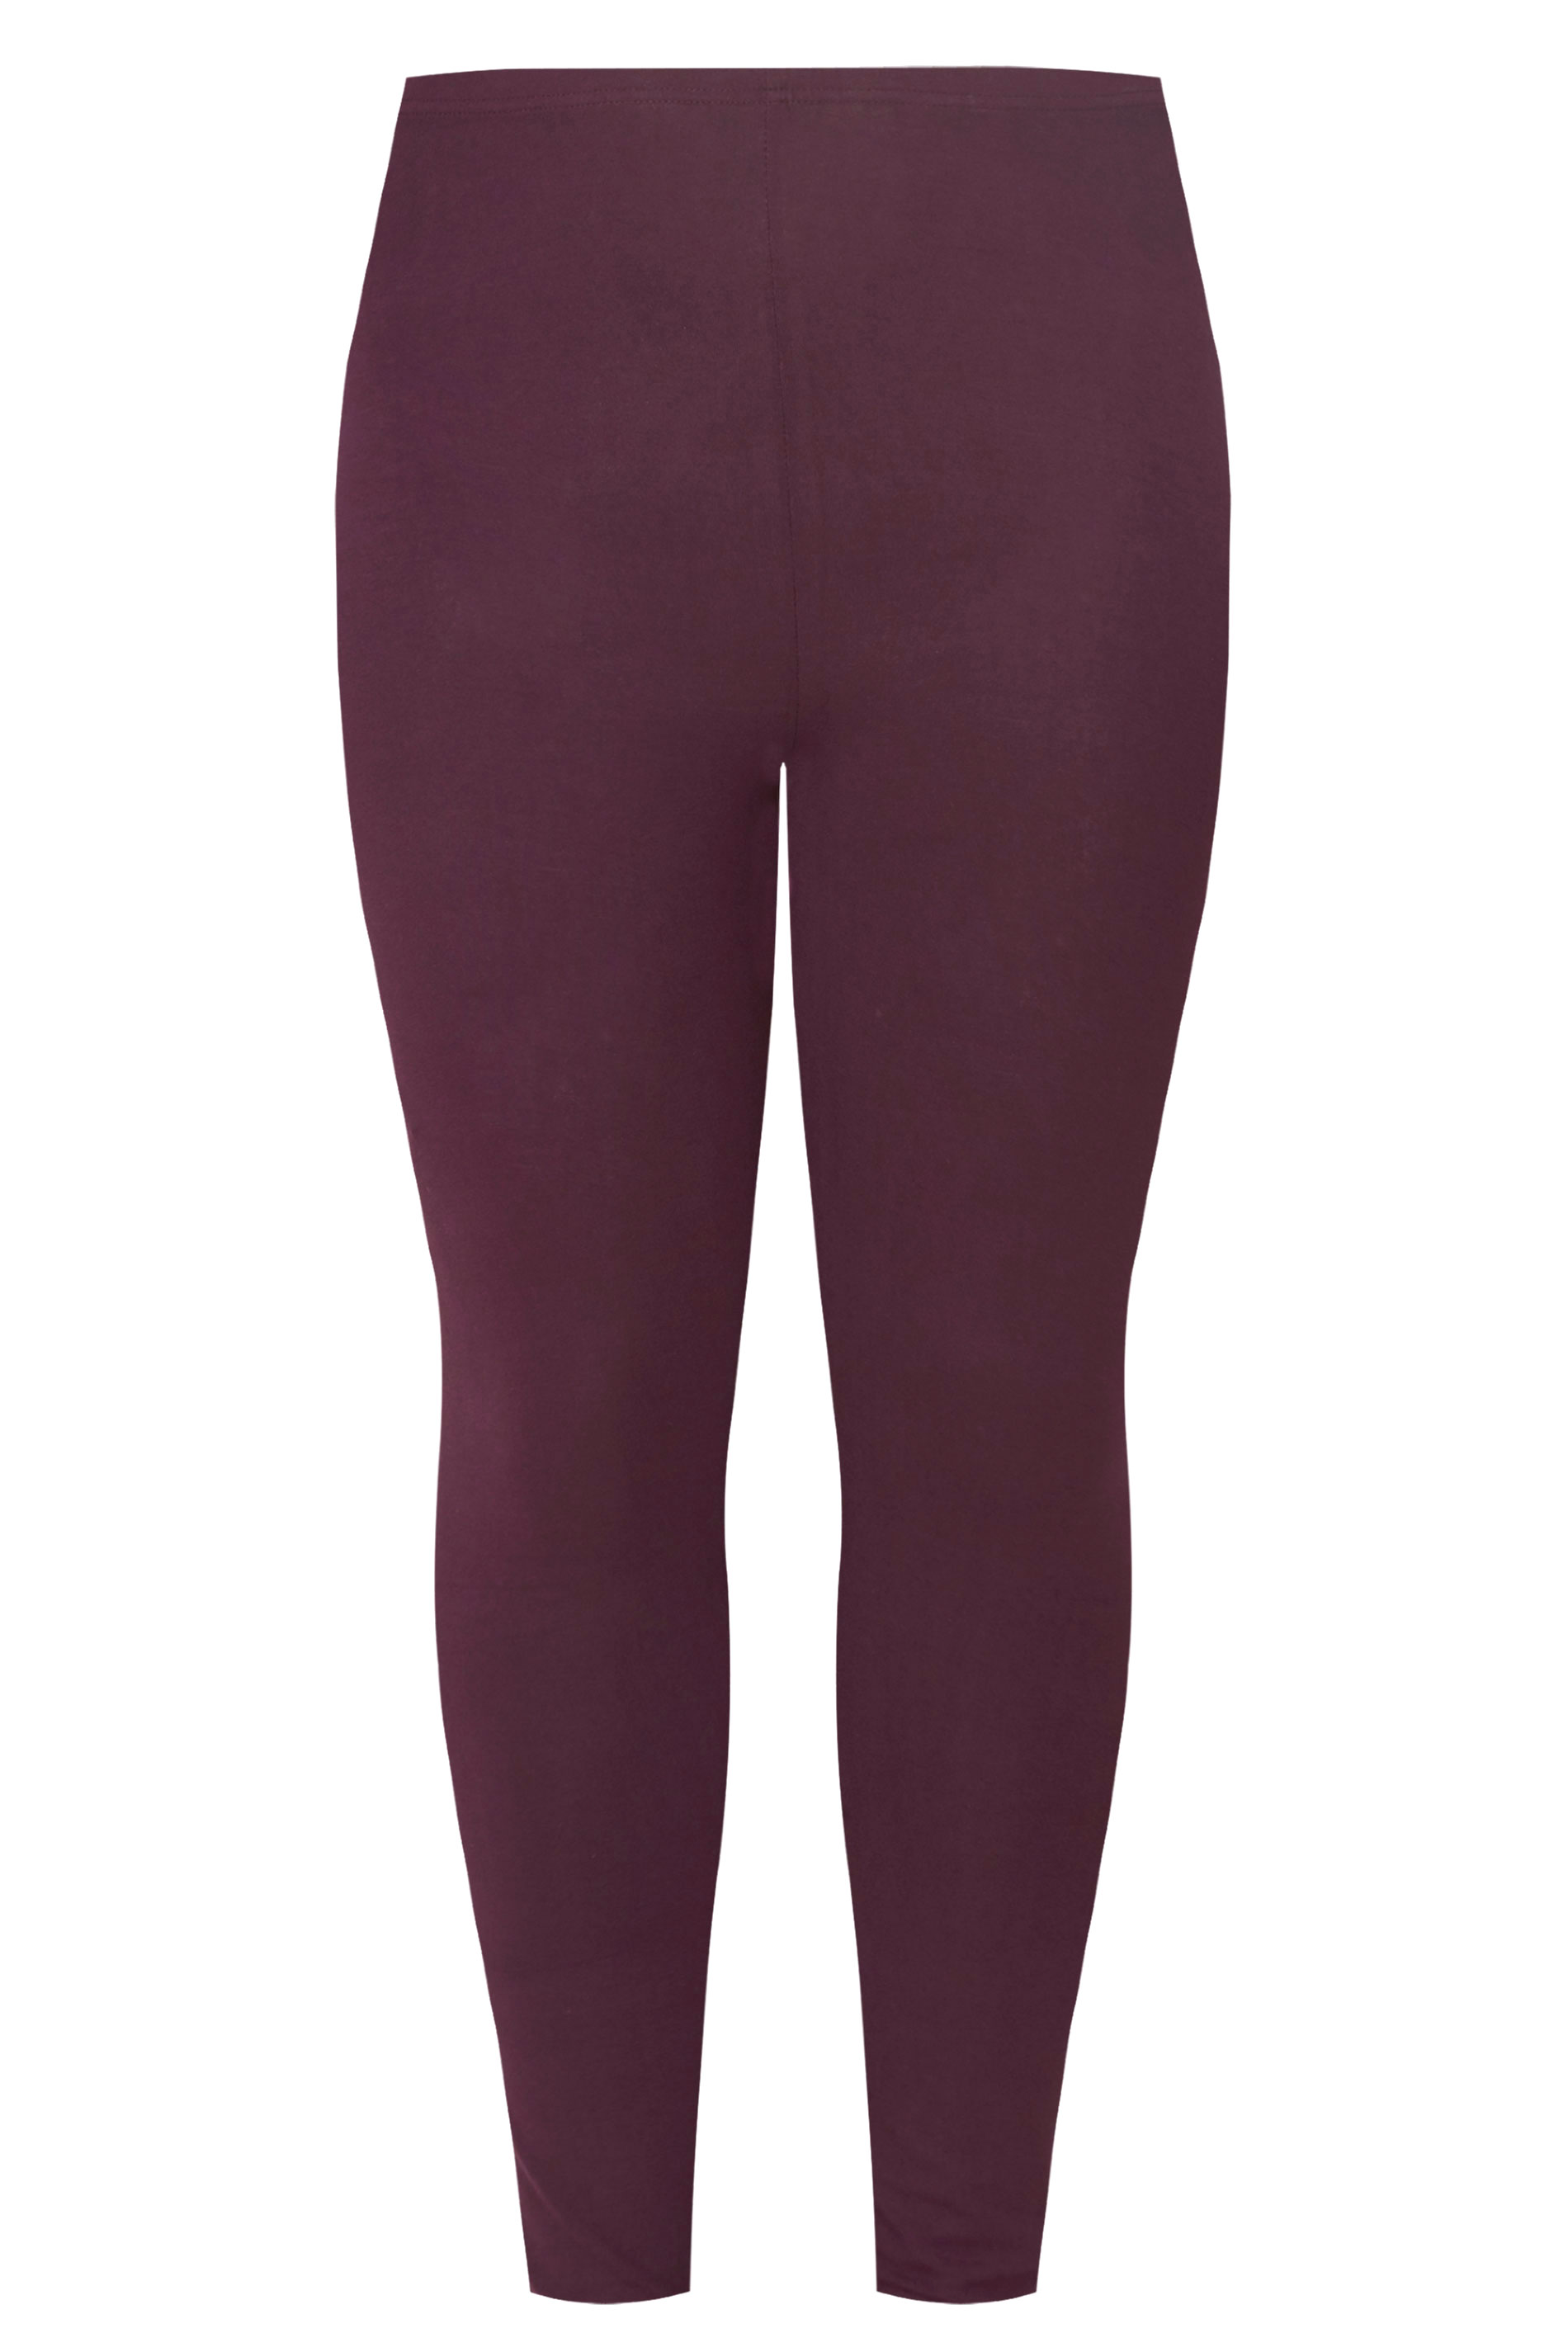 Plus Size Plum Purple Soft Touch Leggings | Yours Clothing